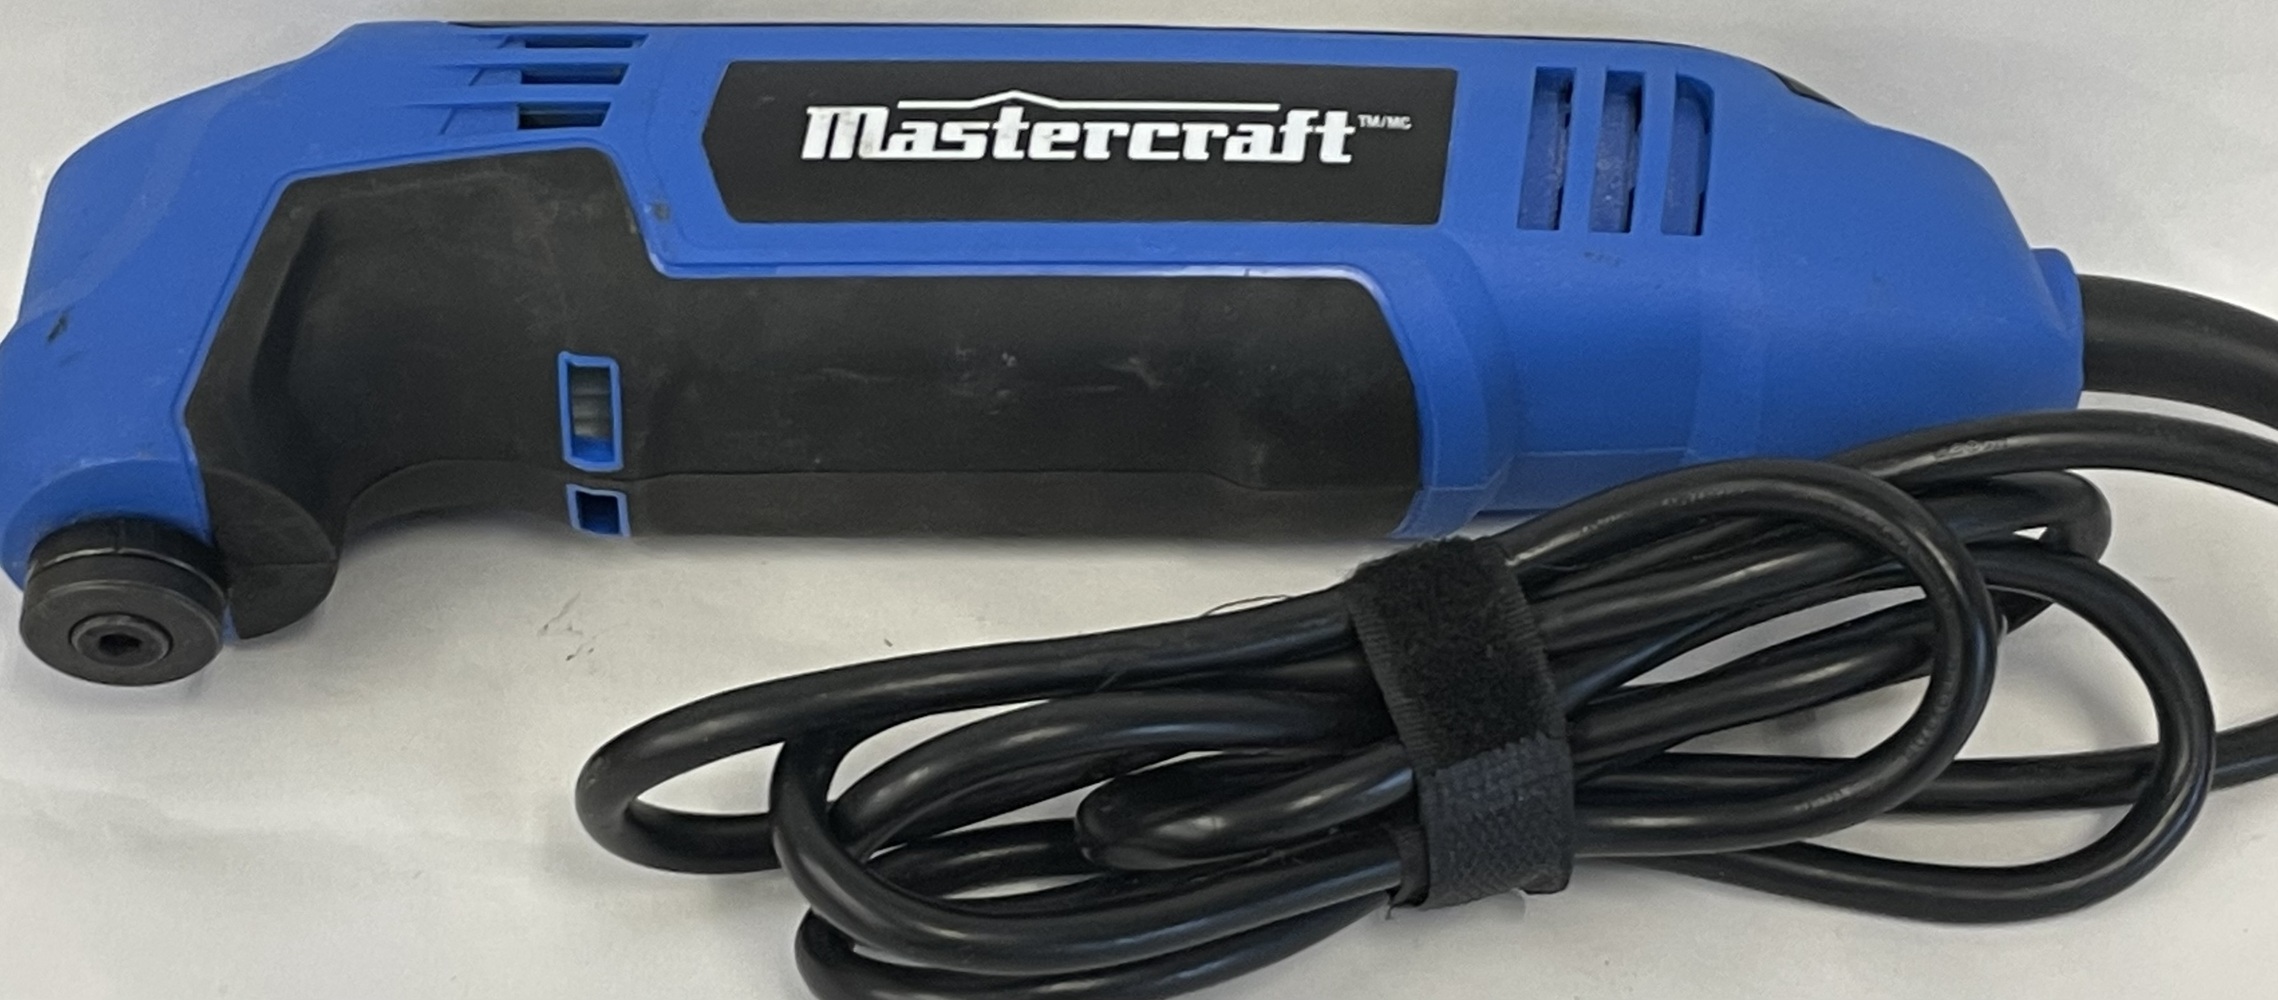 Mastercraft 2.2A Multi-Crafter Oscillating Multi-Tool Kit 